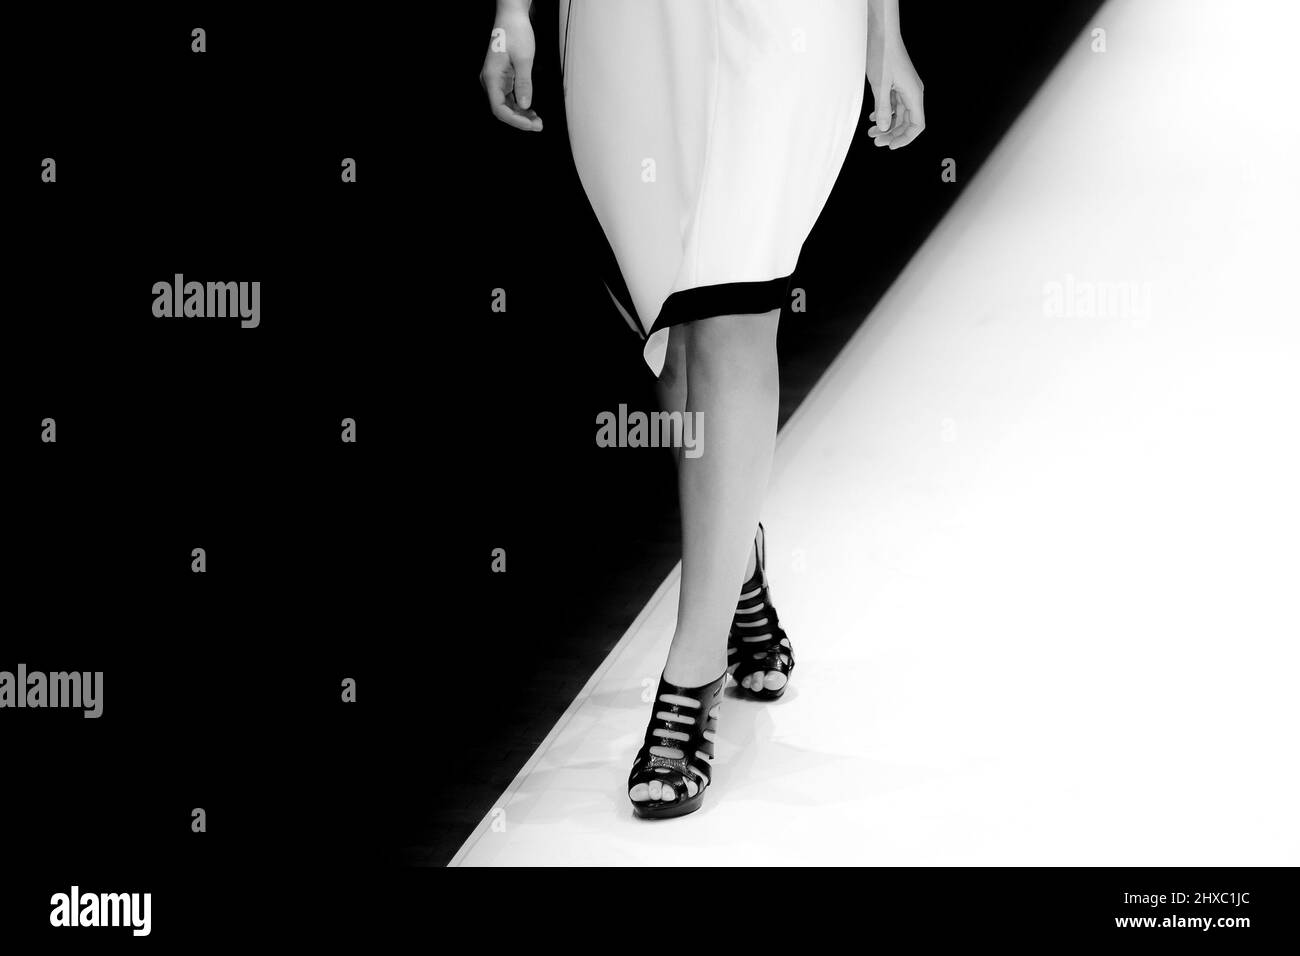 Fashion Show, CatwalkFashion catwalk runway event, model walking the show finale. Stock Photo